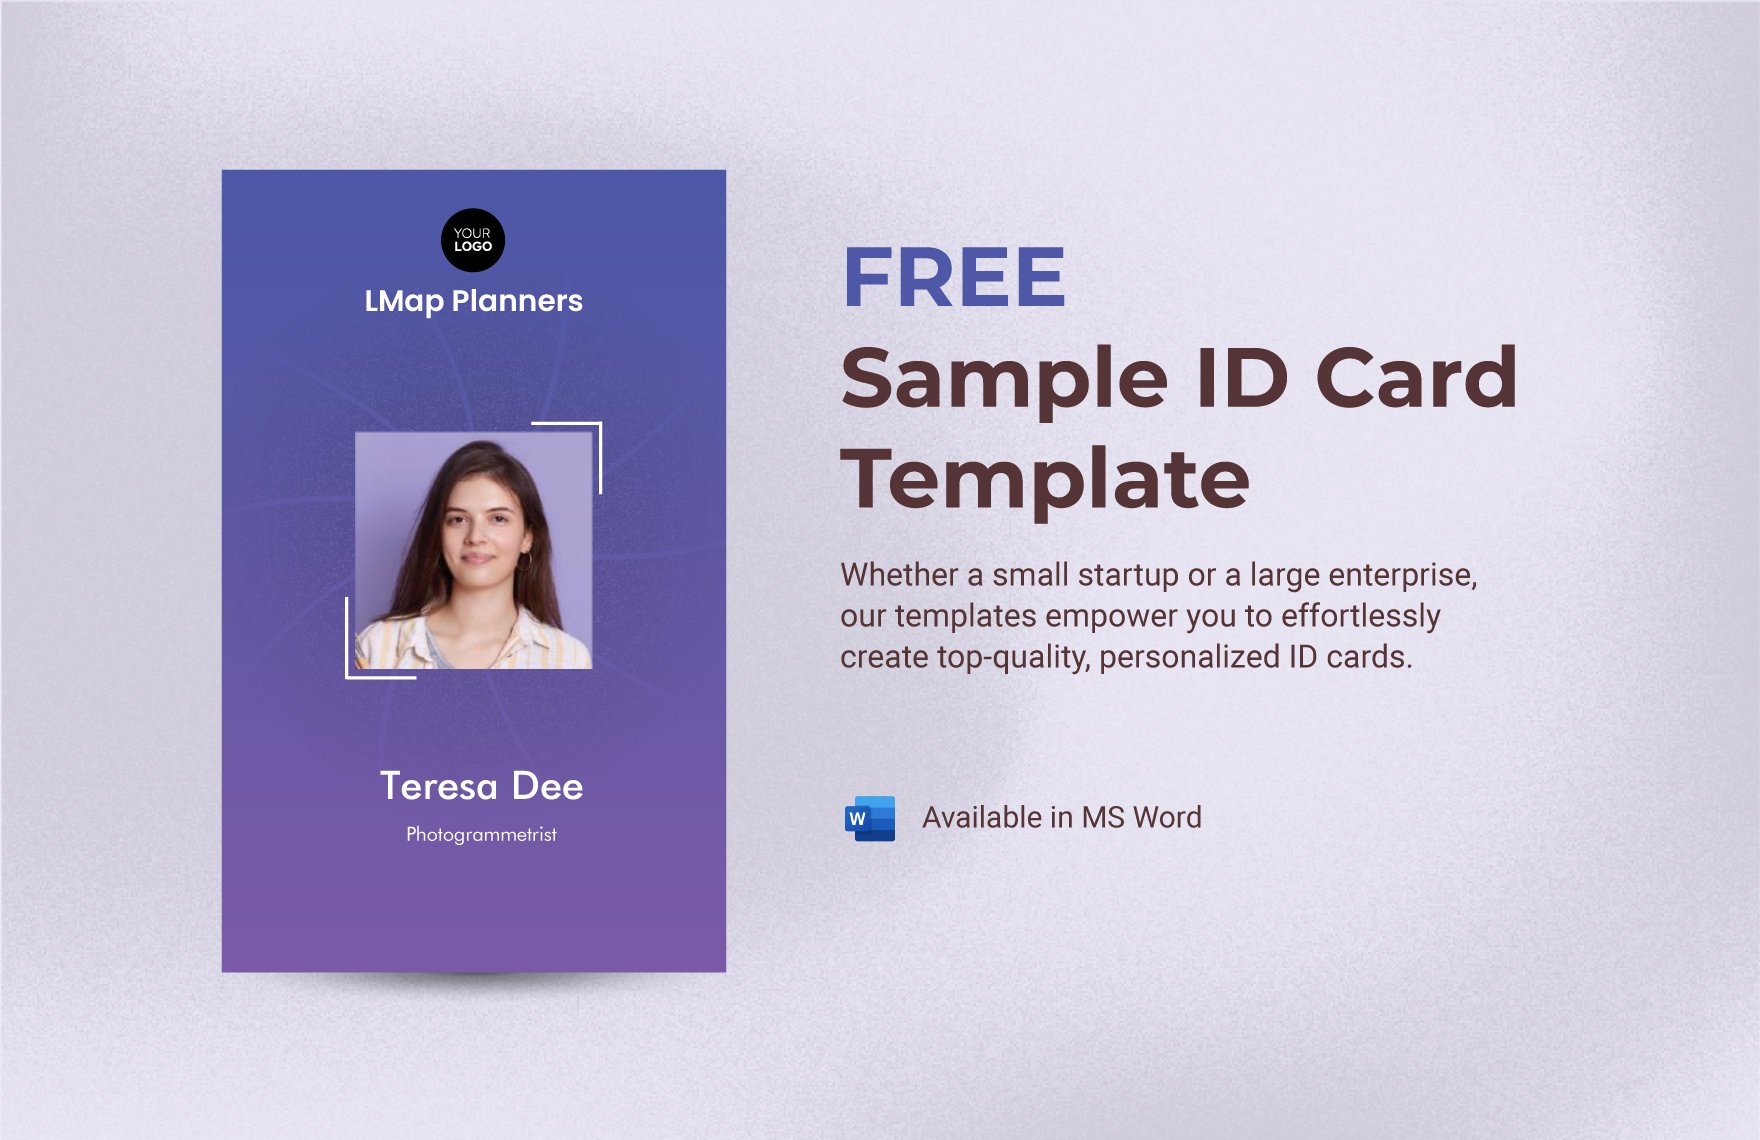 Free Sample ID Card Template